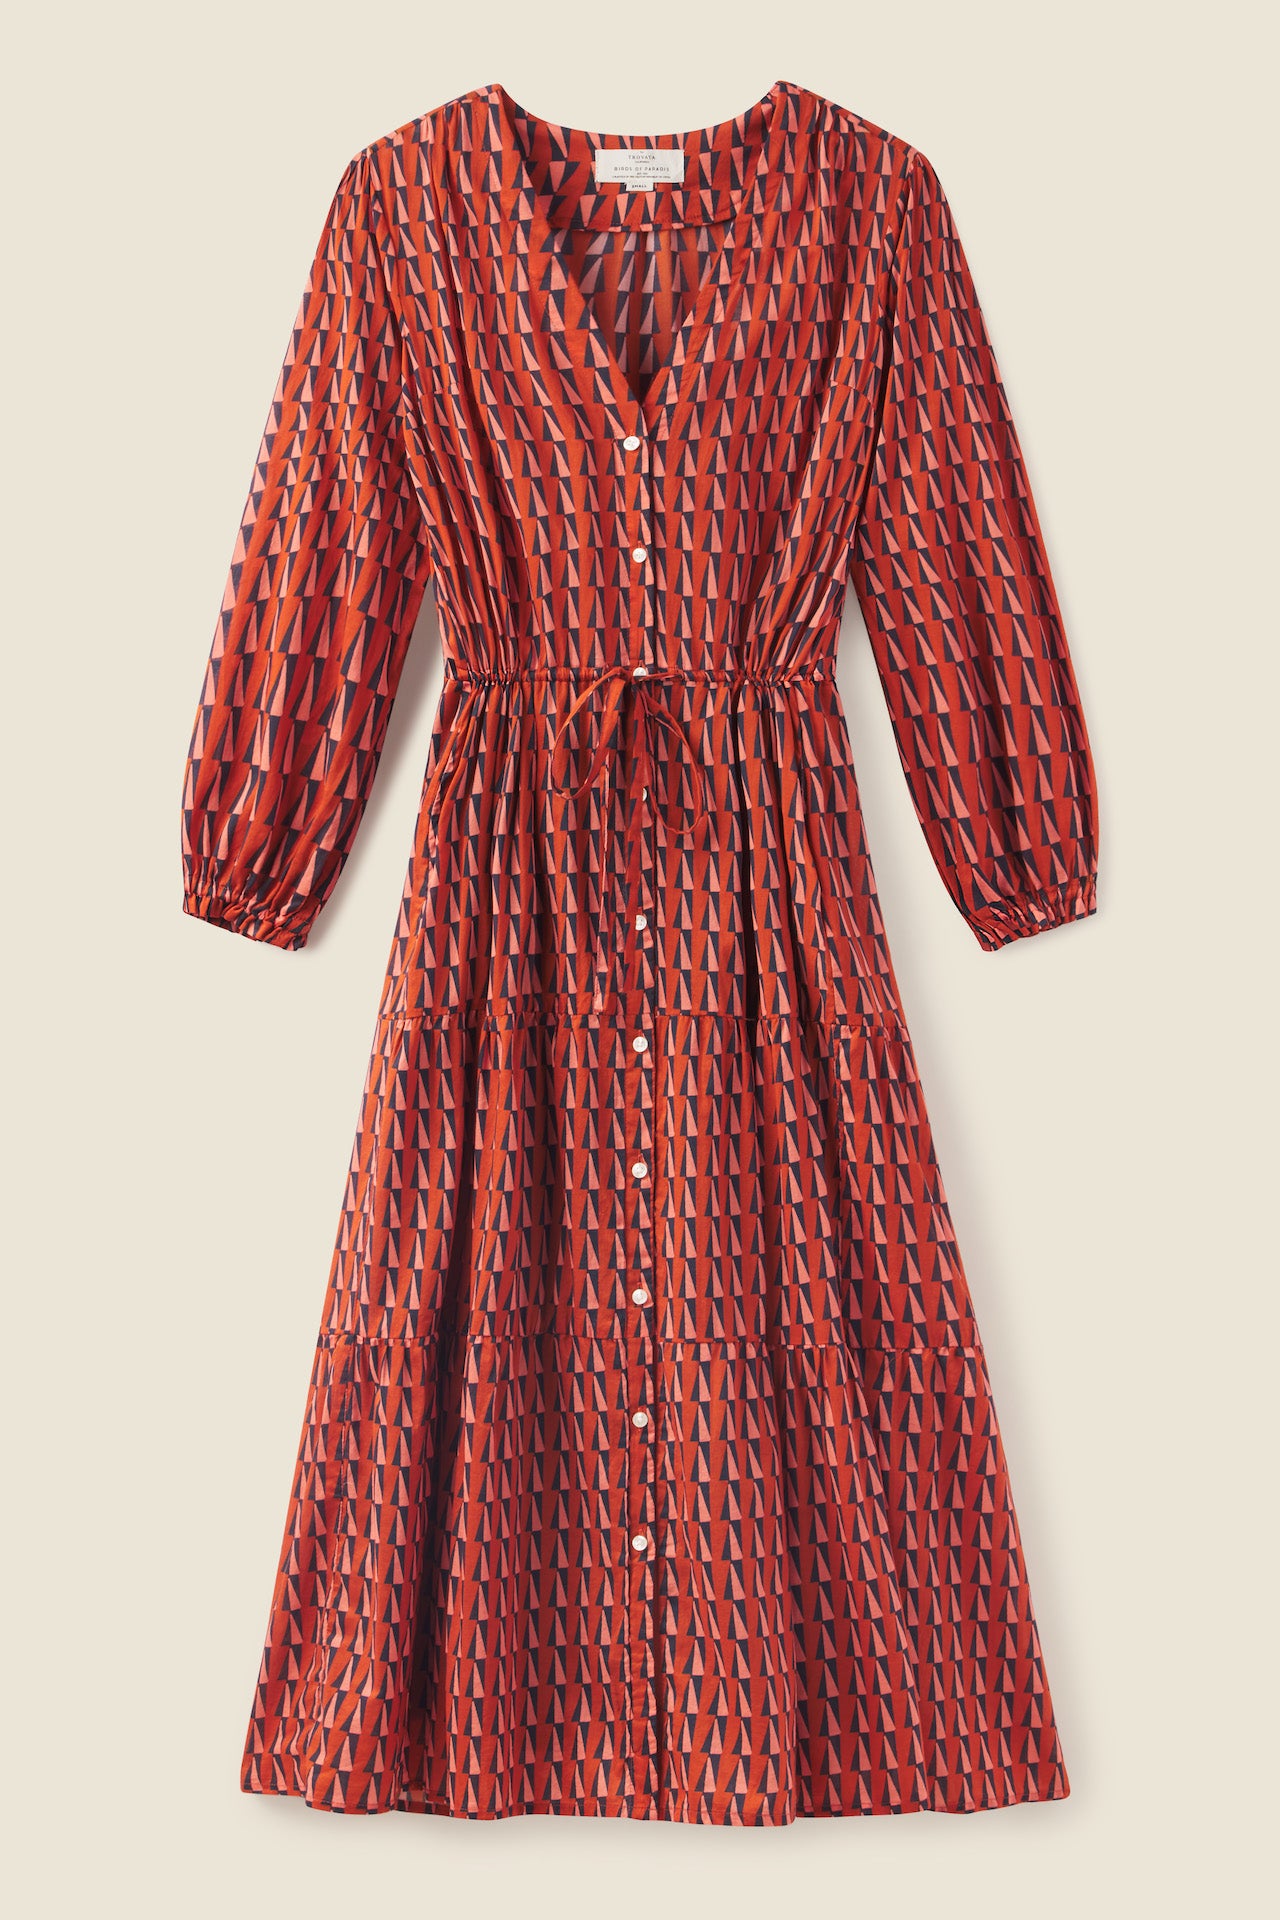 Ainsley "B" Dress Kinetic Print